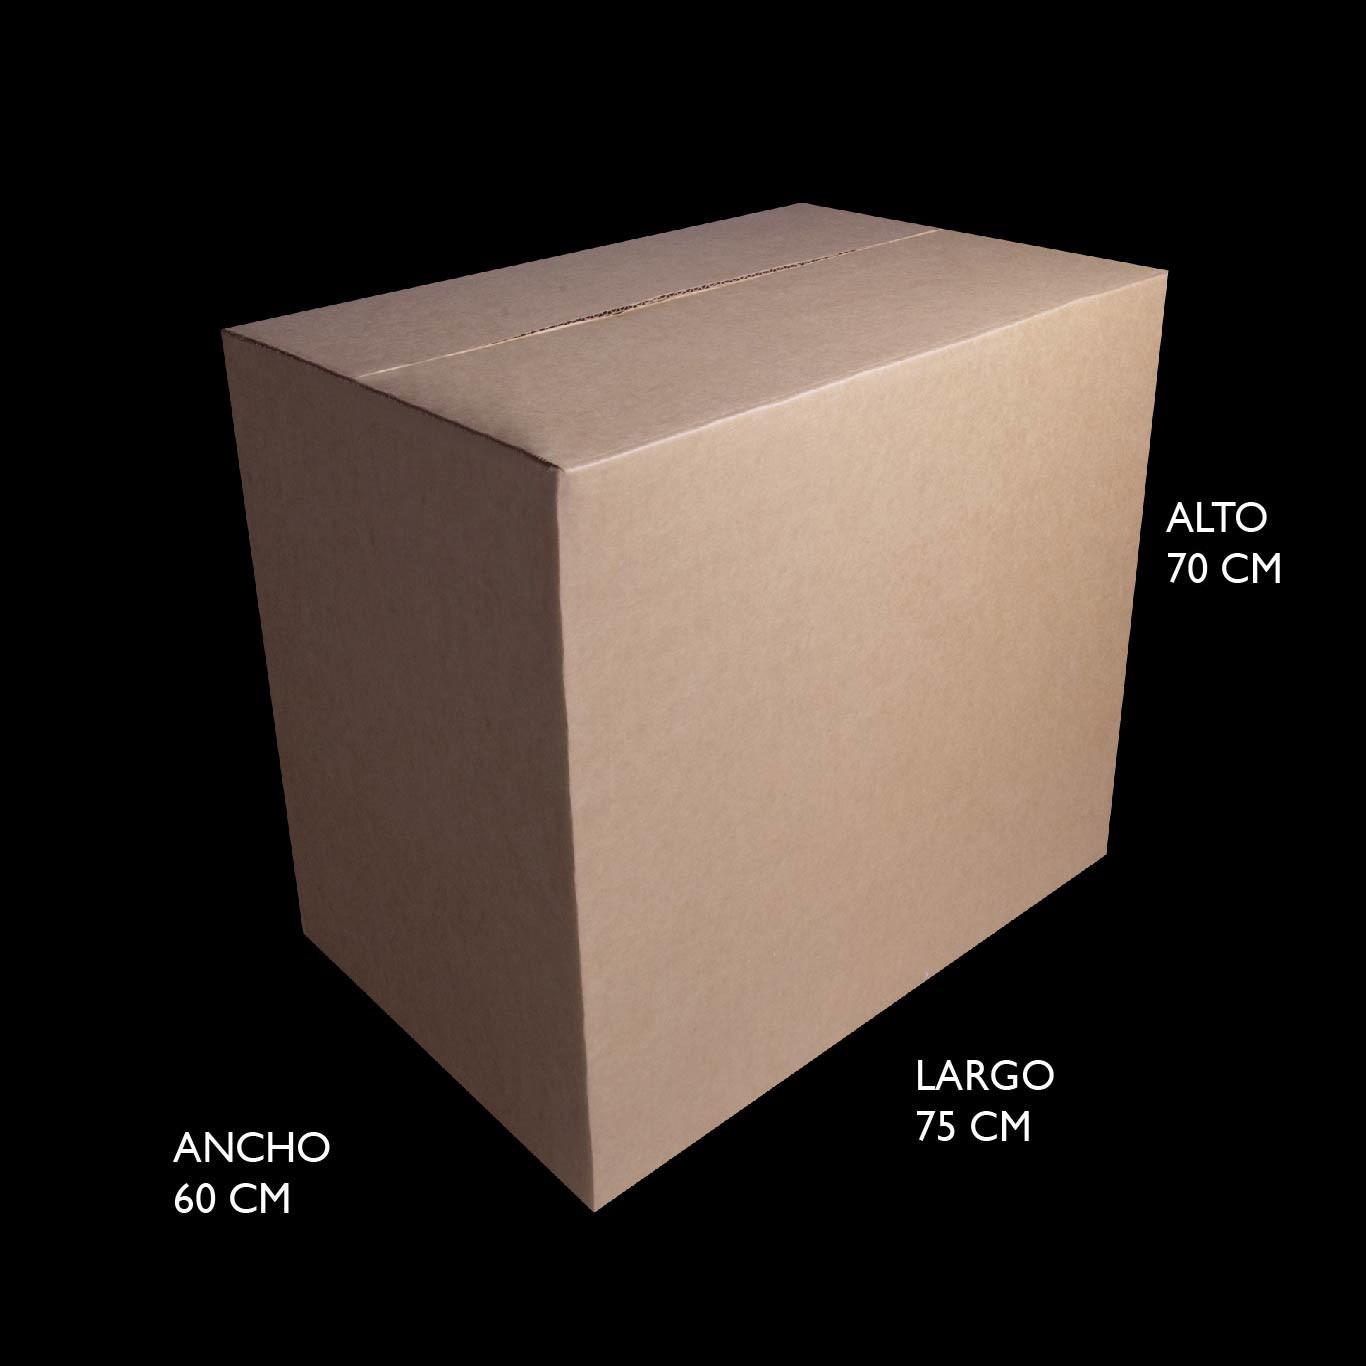 Cajas extra grandes - 75 cm * 60 cm * 70 cm - DEMPAQUE